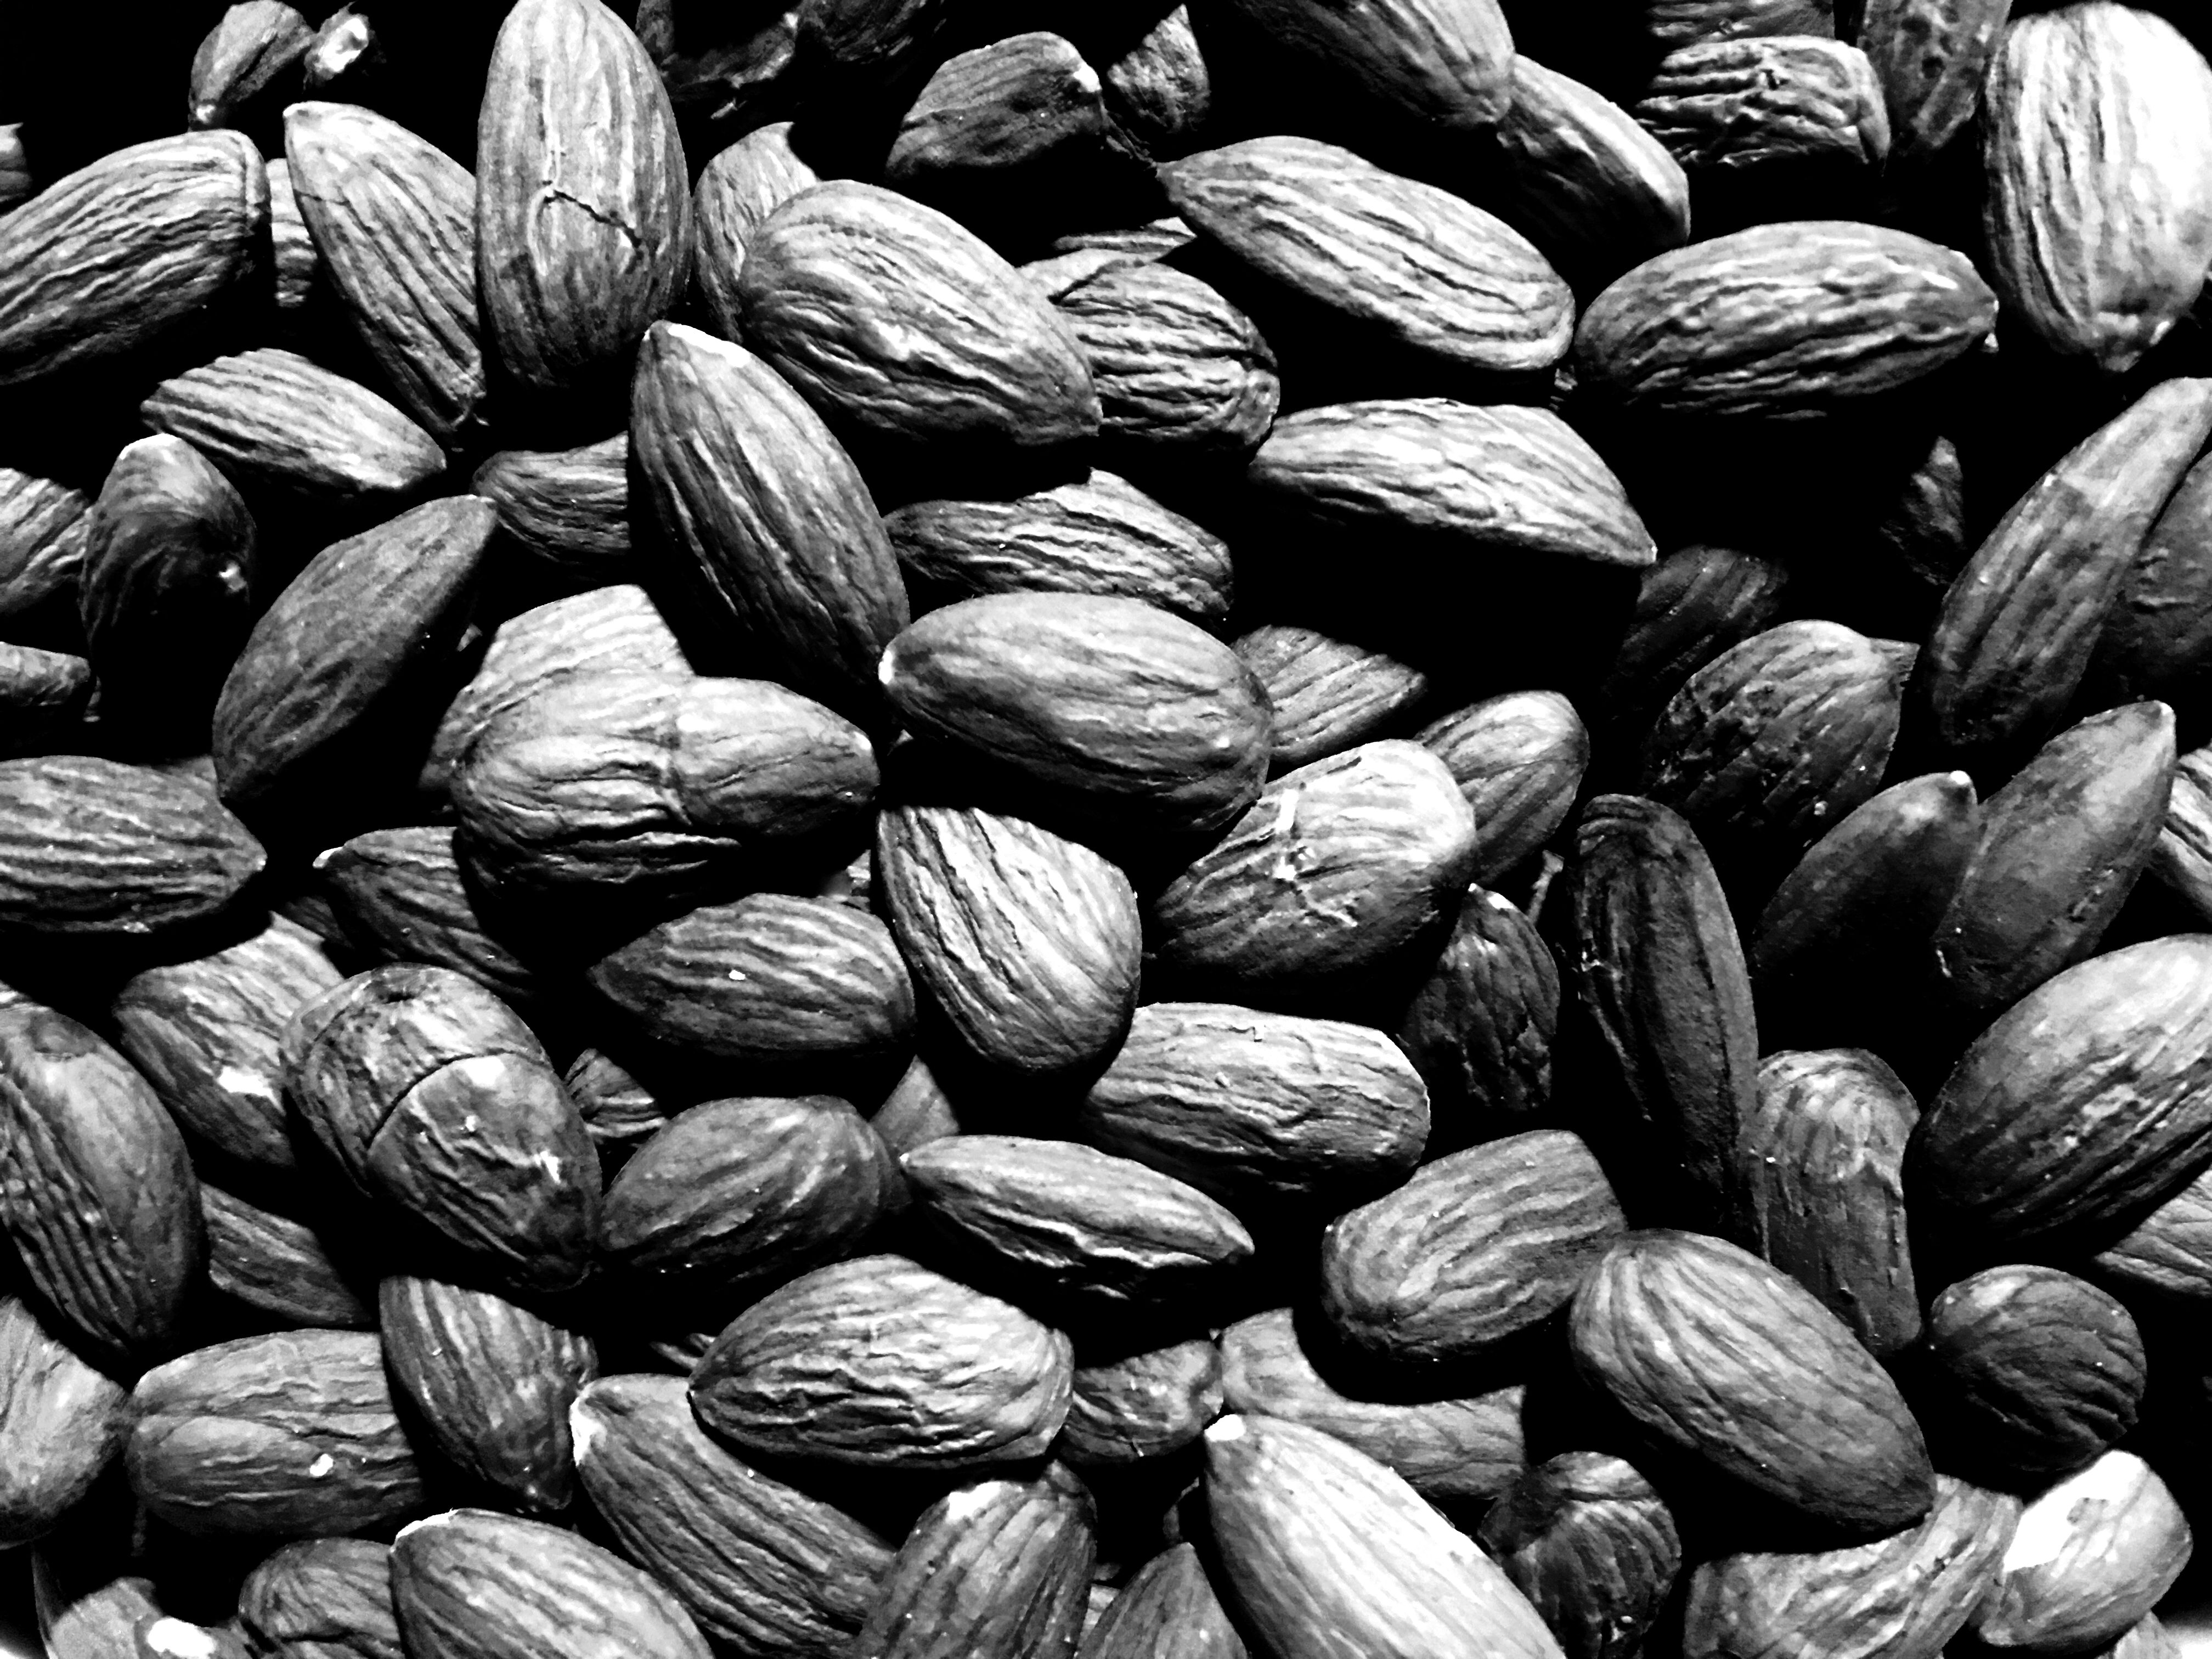 almonds.jpg